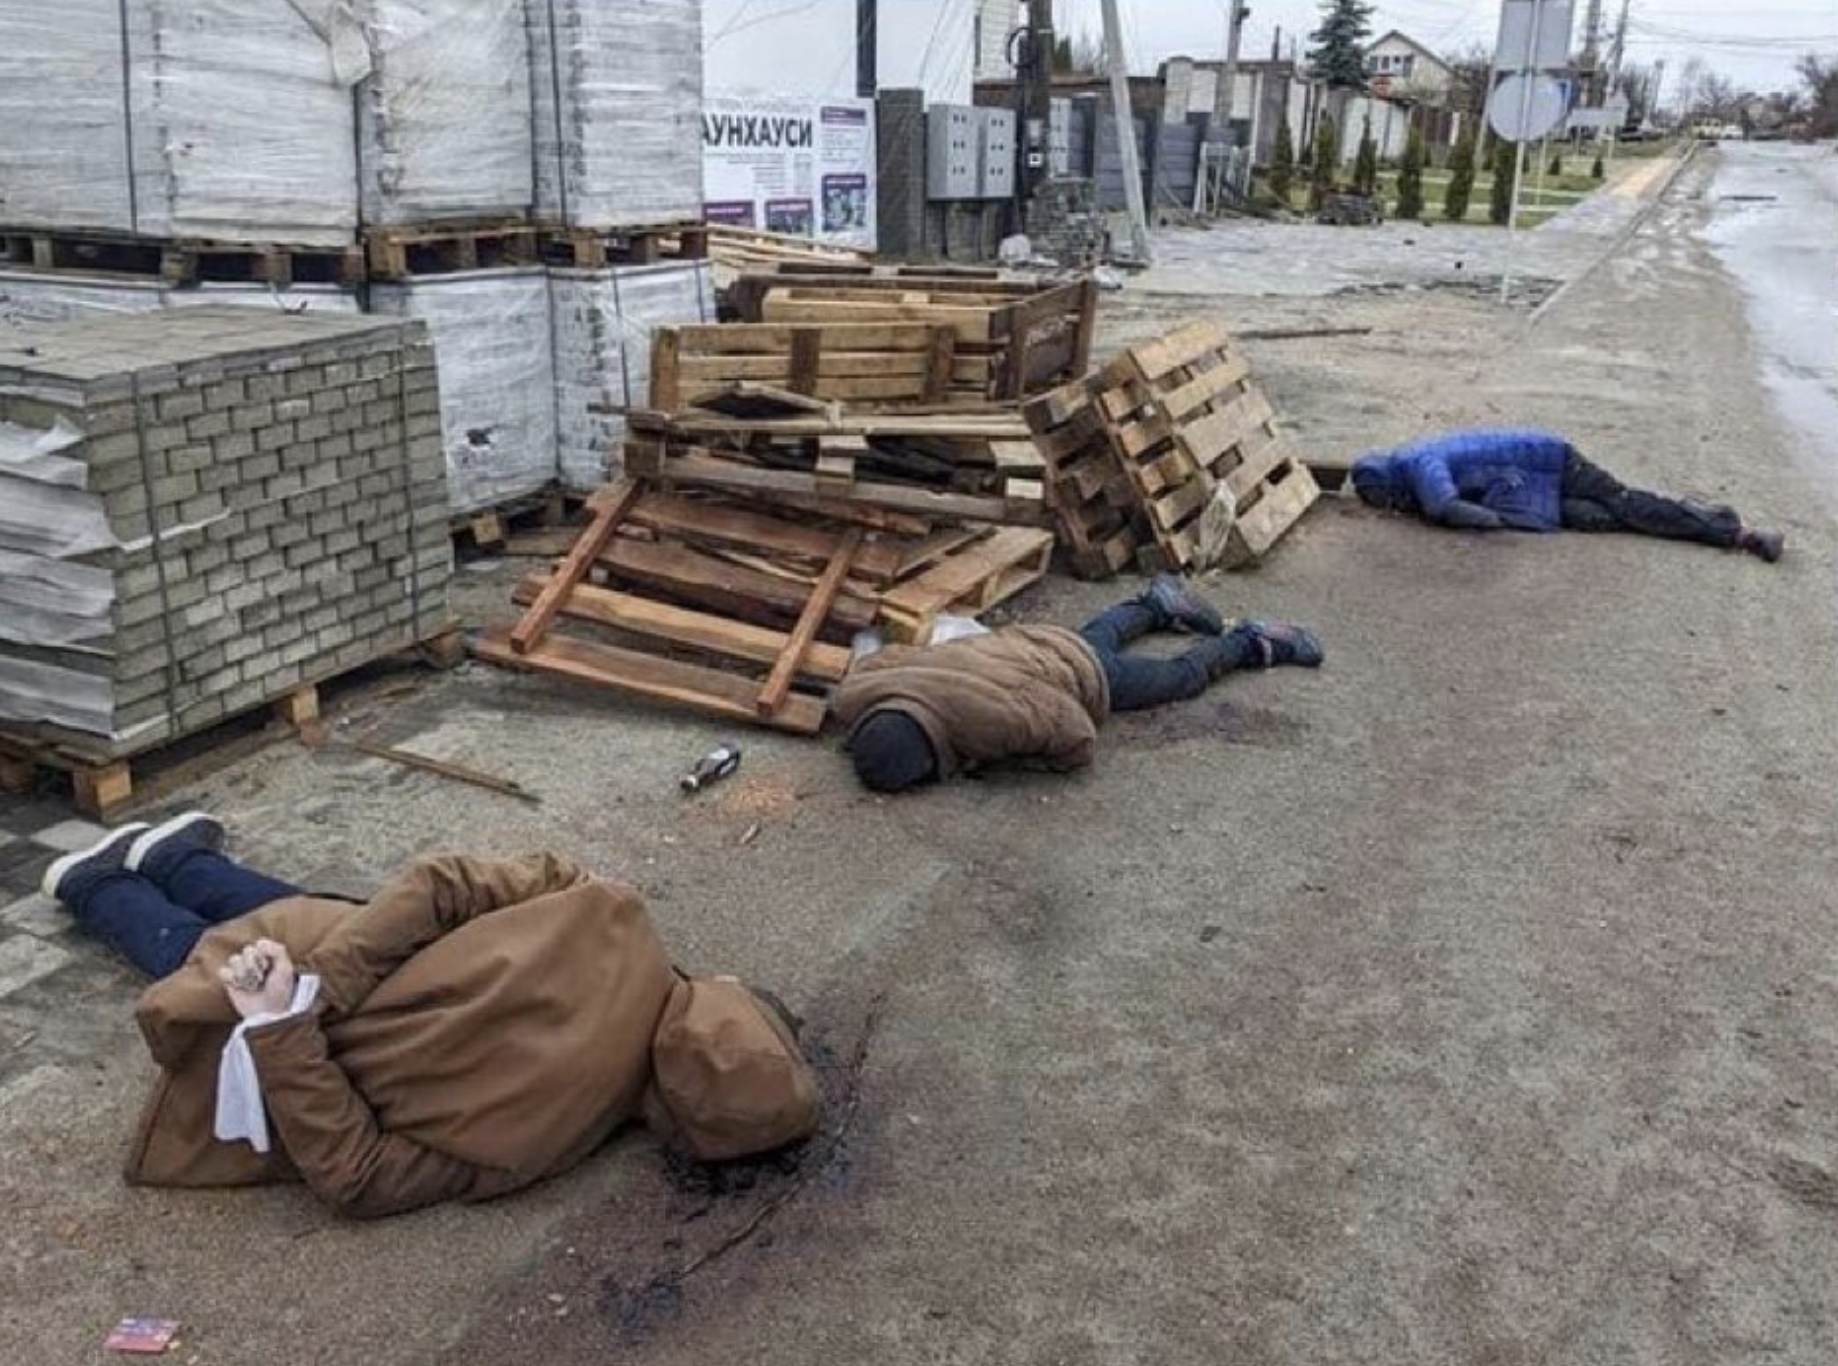 Image of Ukrainian Dead by Mykhailo Podoliak